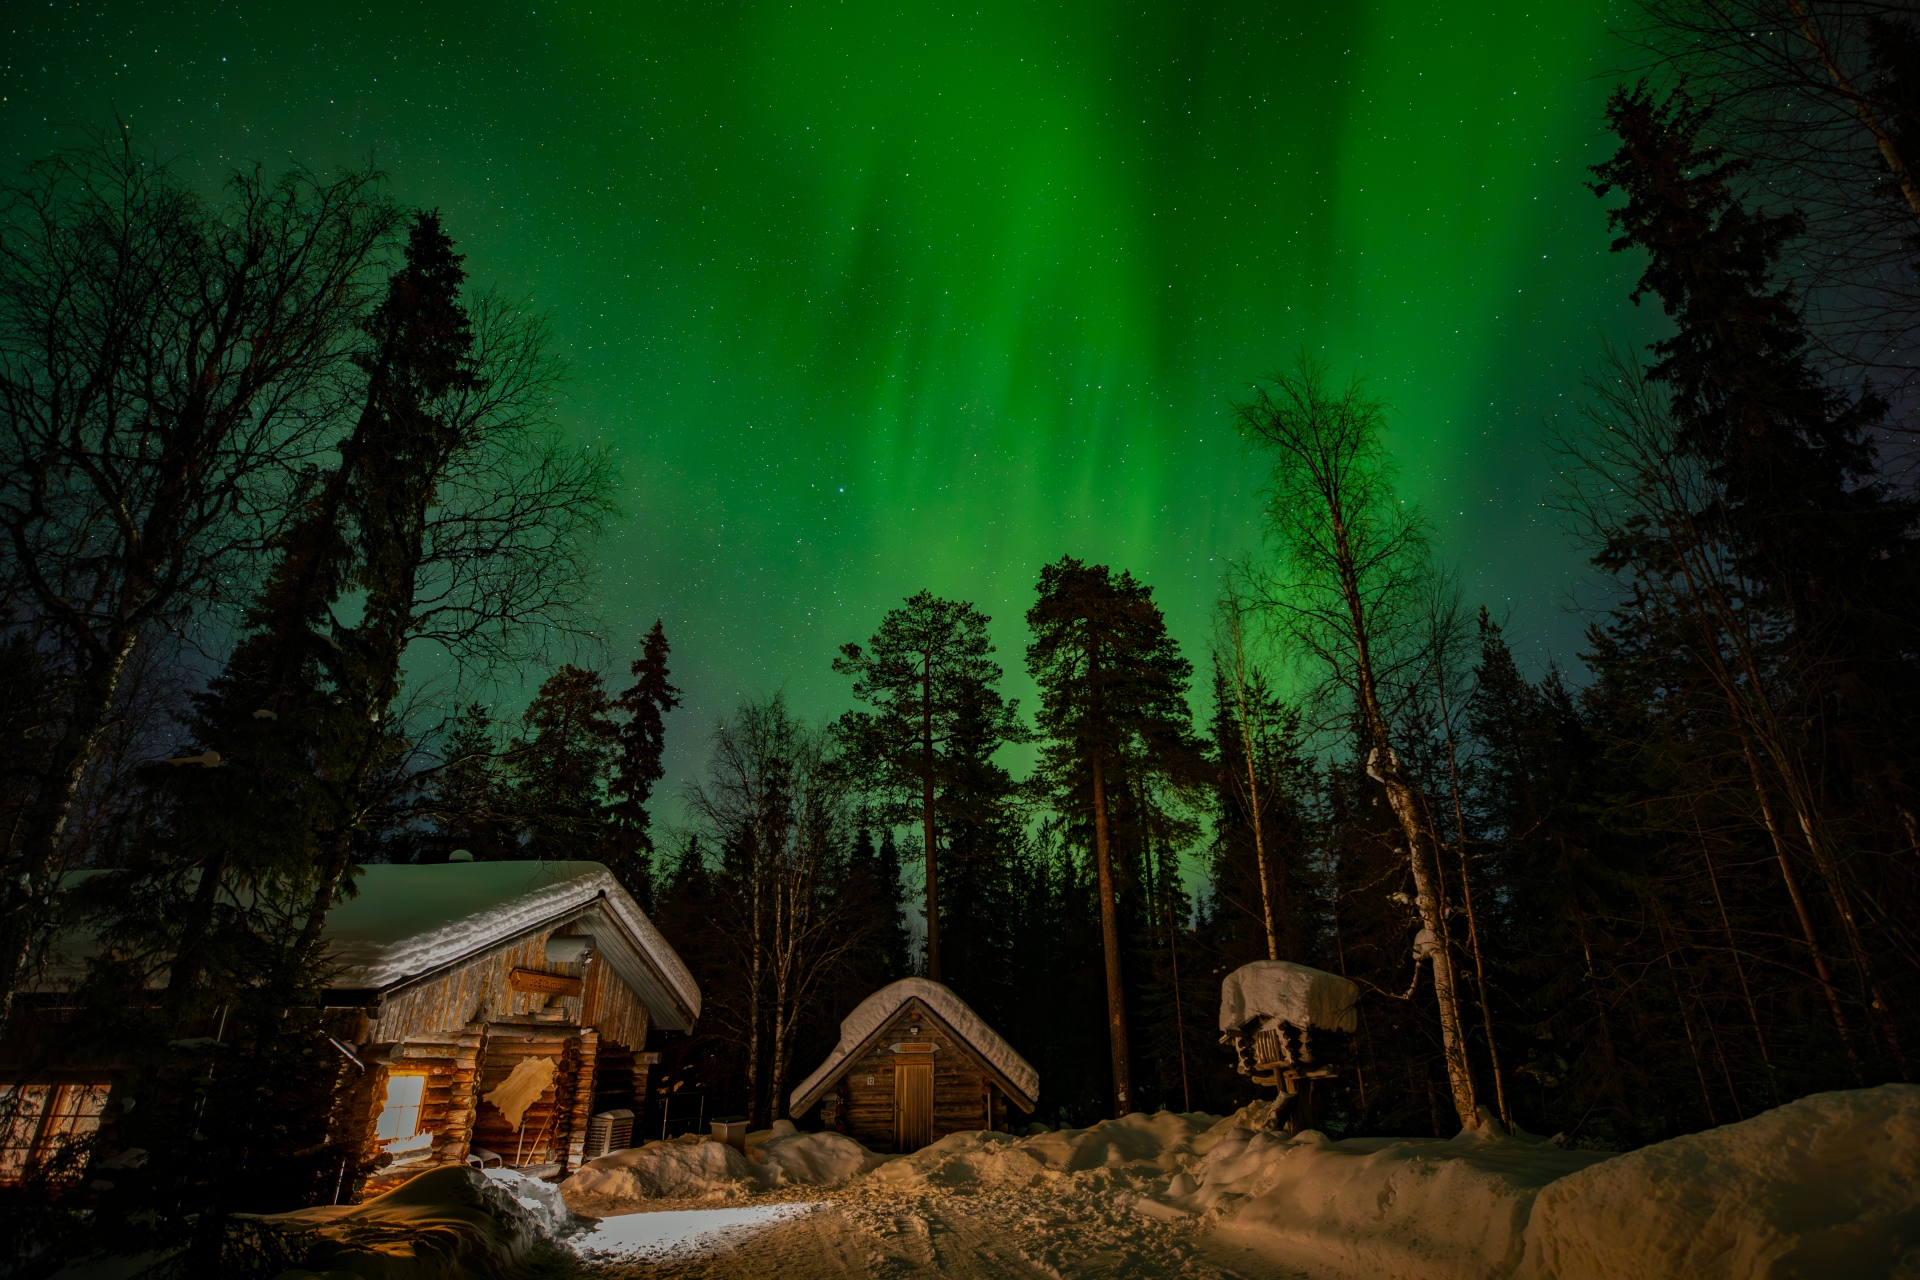 Luosto, Finland